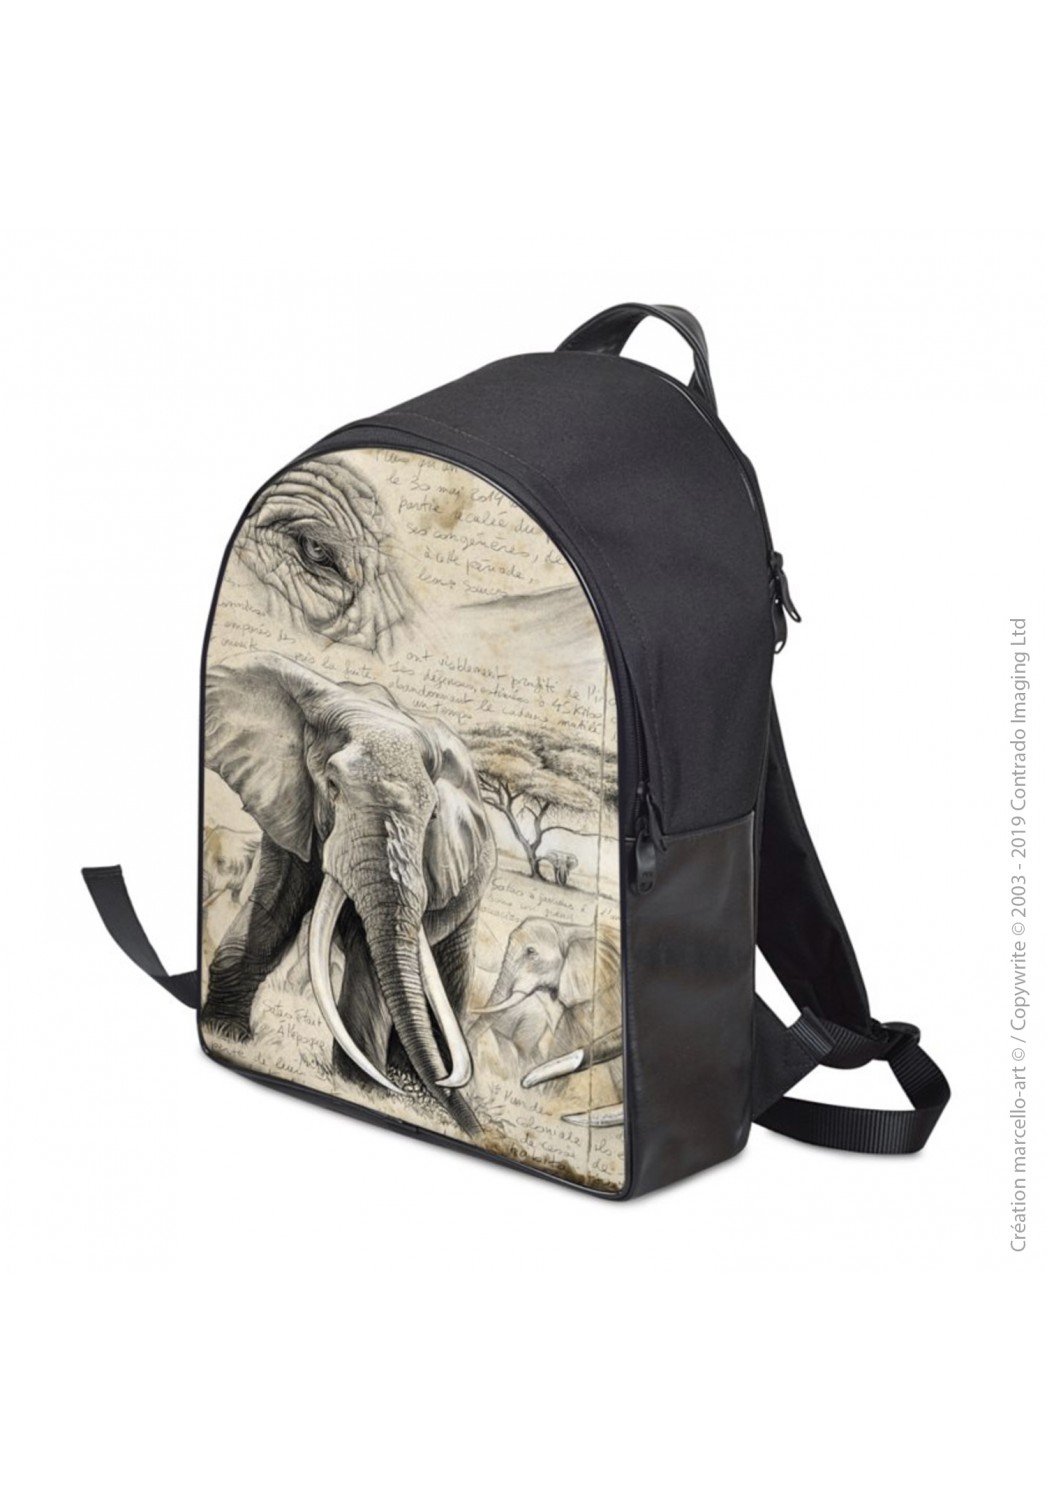 Marcello-art: Fashion accessory Backpack 303 A Satao